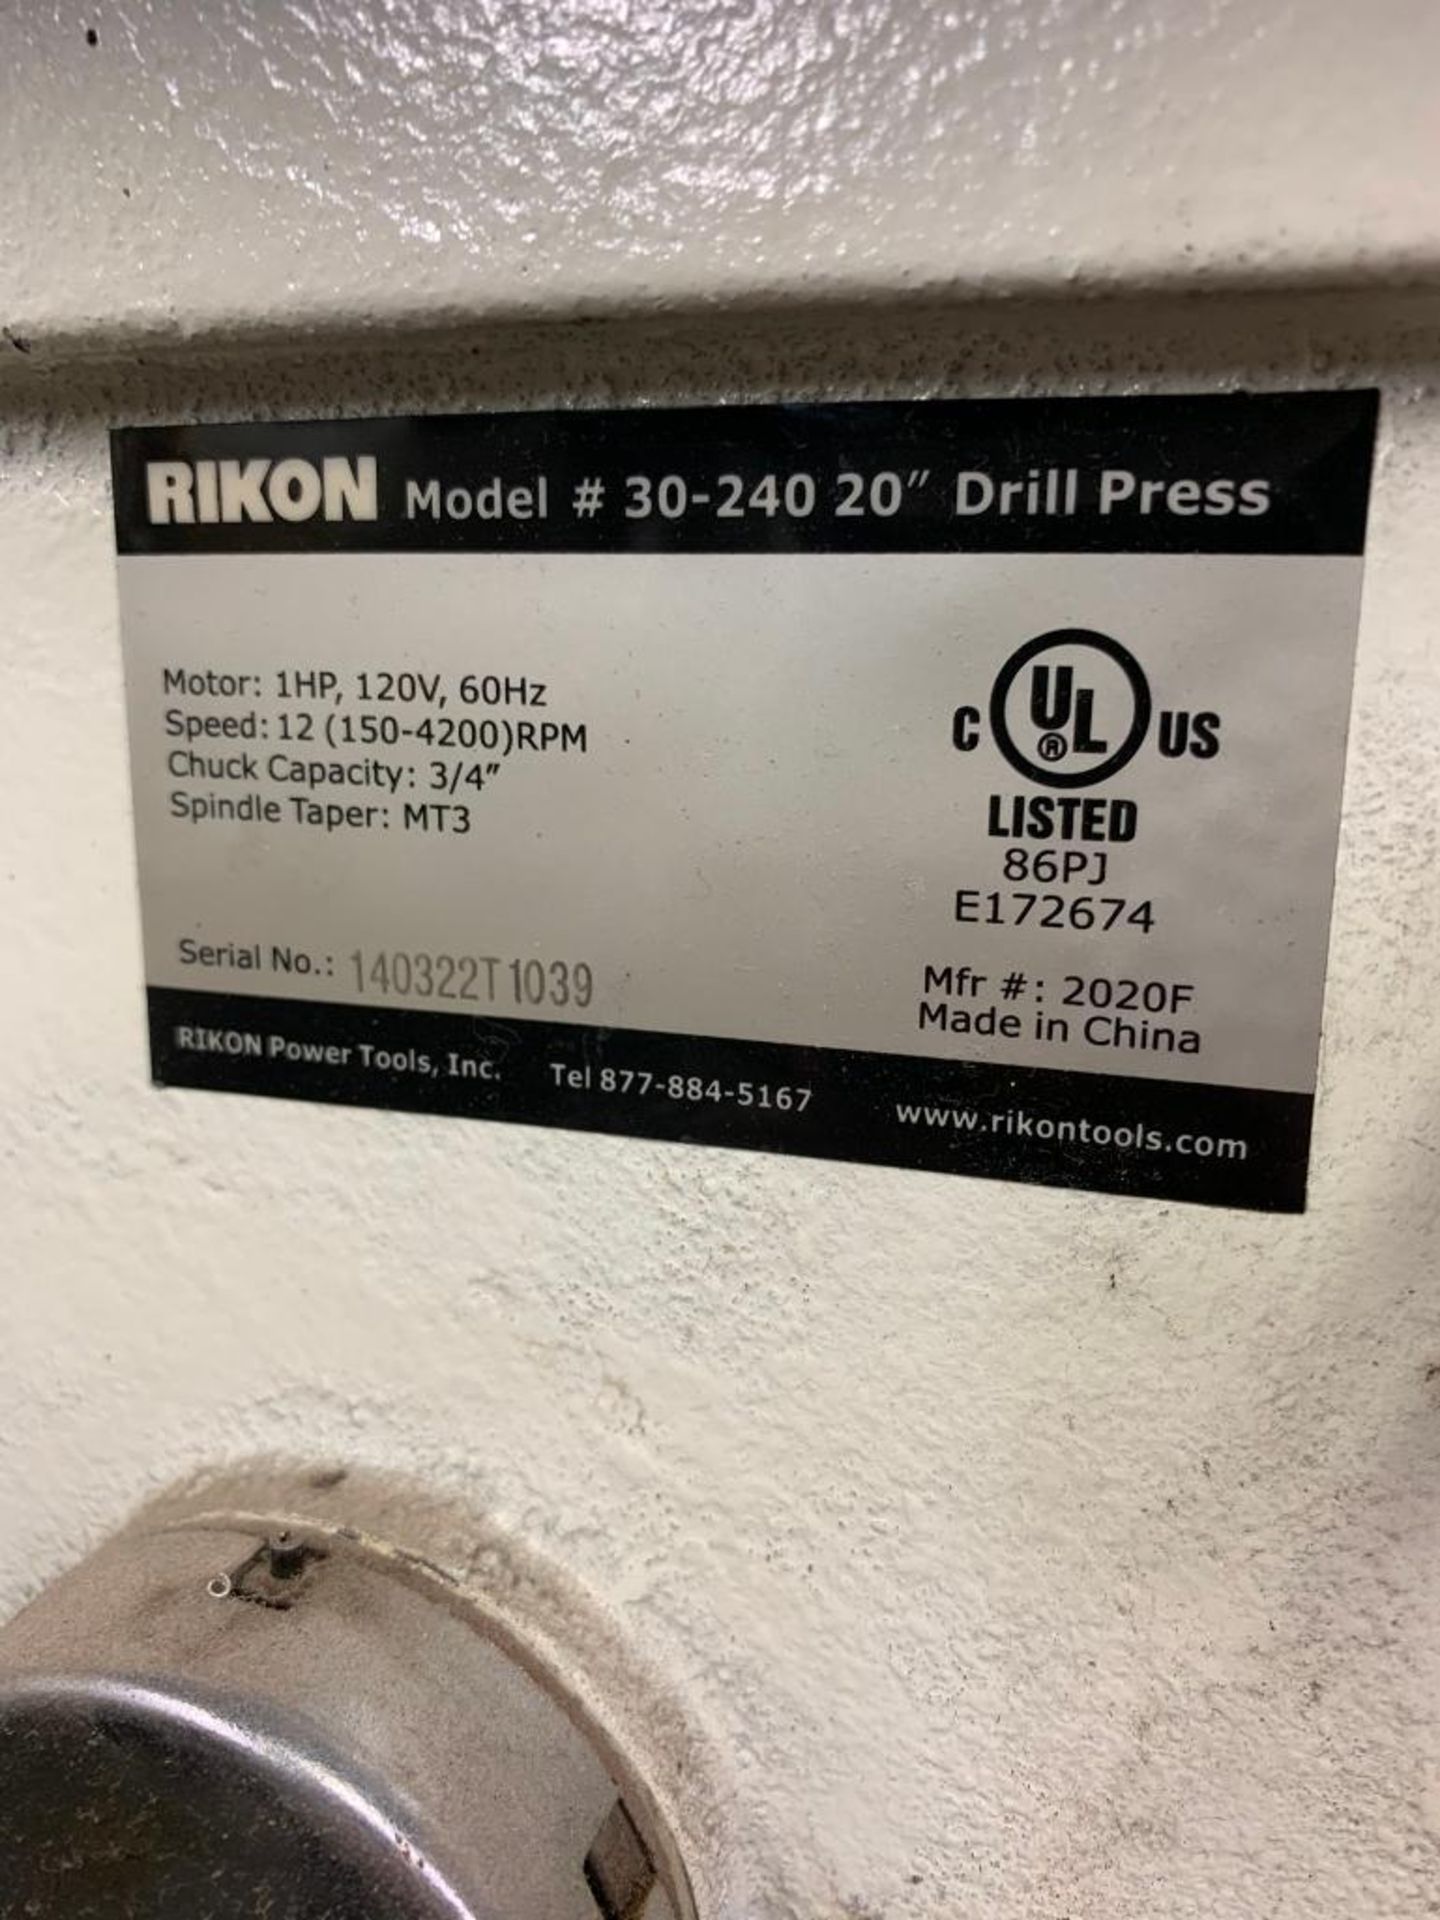 Rikon 20" Drill Press, 1-HP, 120 V, 150-4200 RPM, S/N 140322T1039 - Image 4 of 4